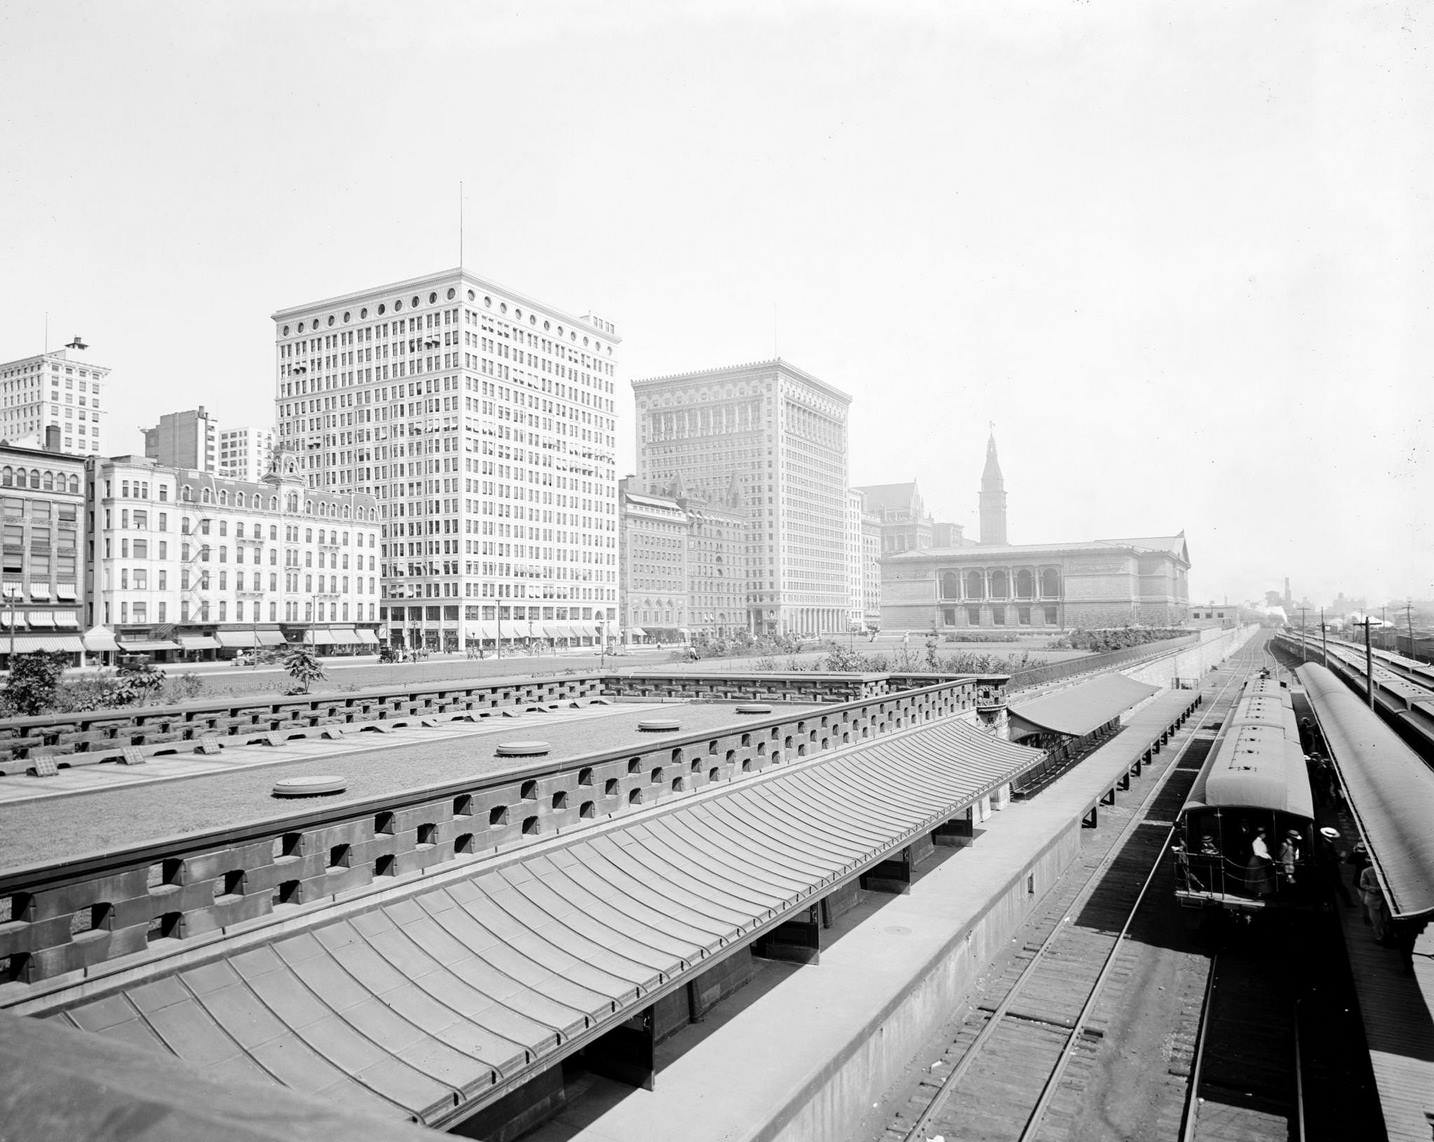 View, looking northward, from the Van Buren Street railroad station, Chicago, Illinois, 1915.